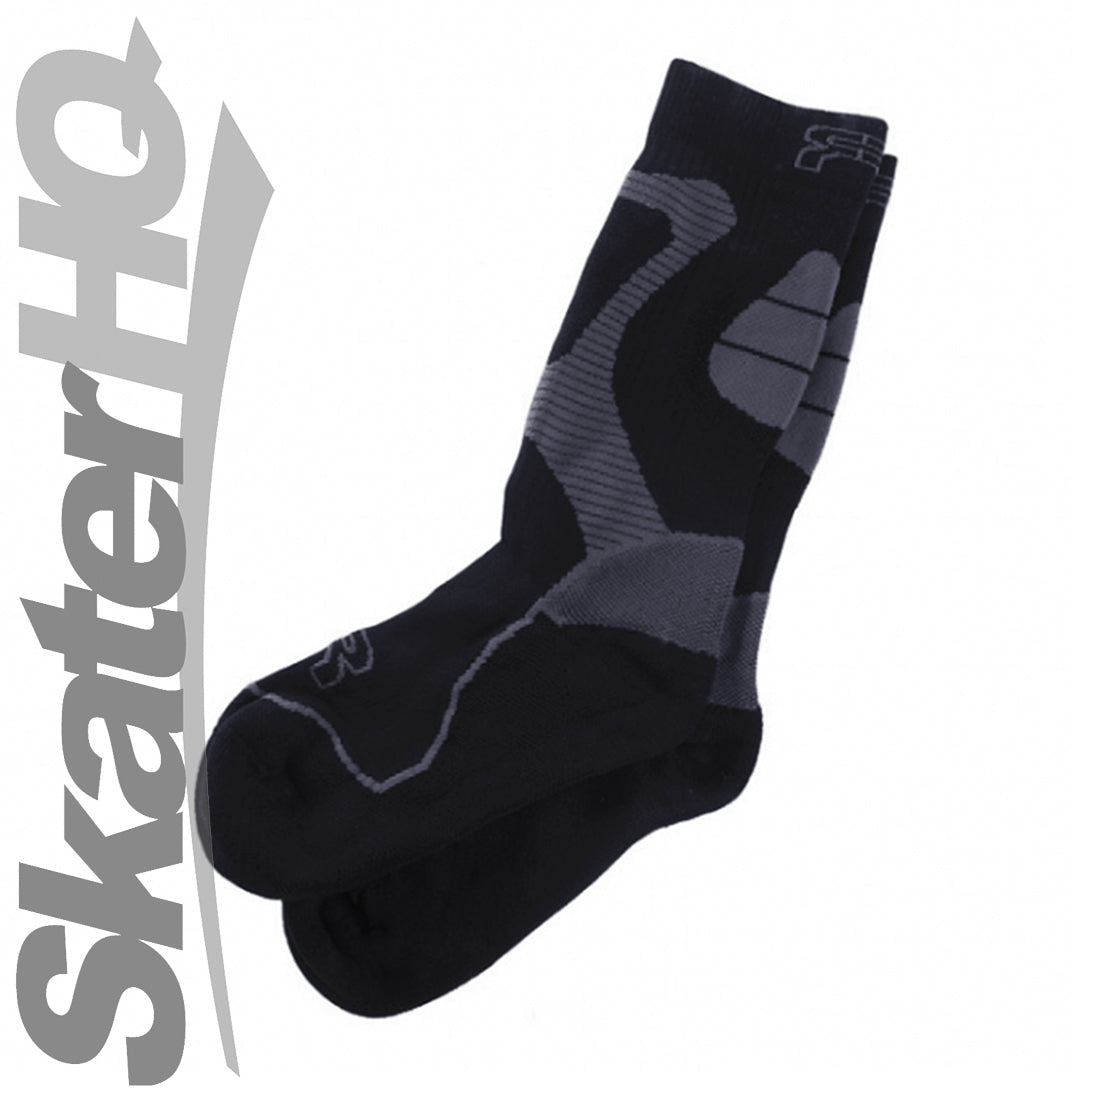 FR Nano Sport Socks Black - Small - EU36-38 Apparel Socks